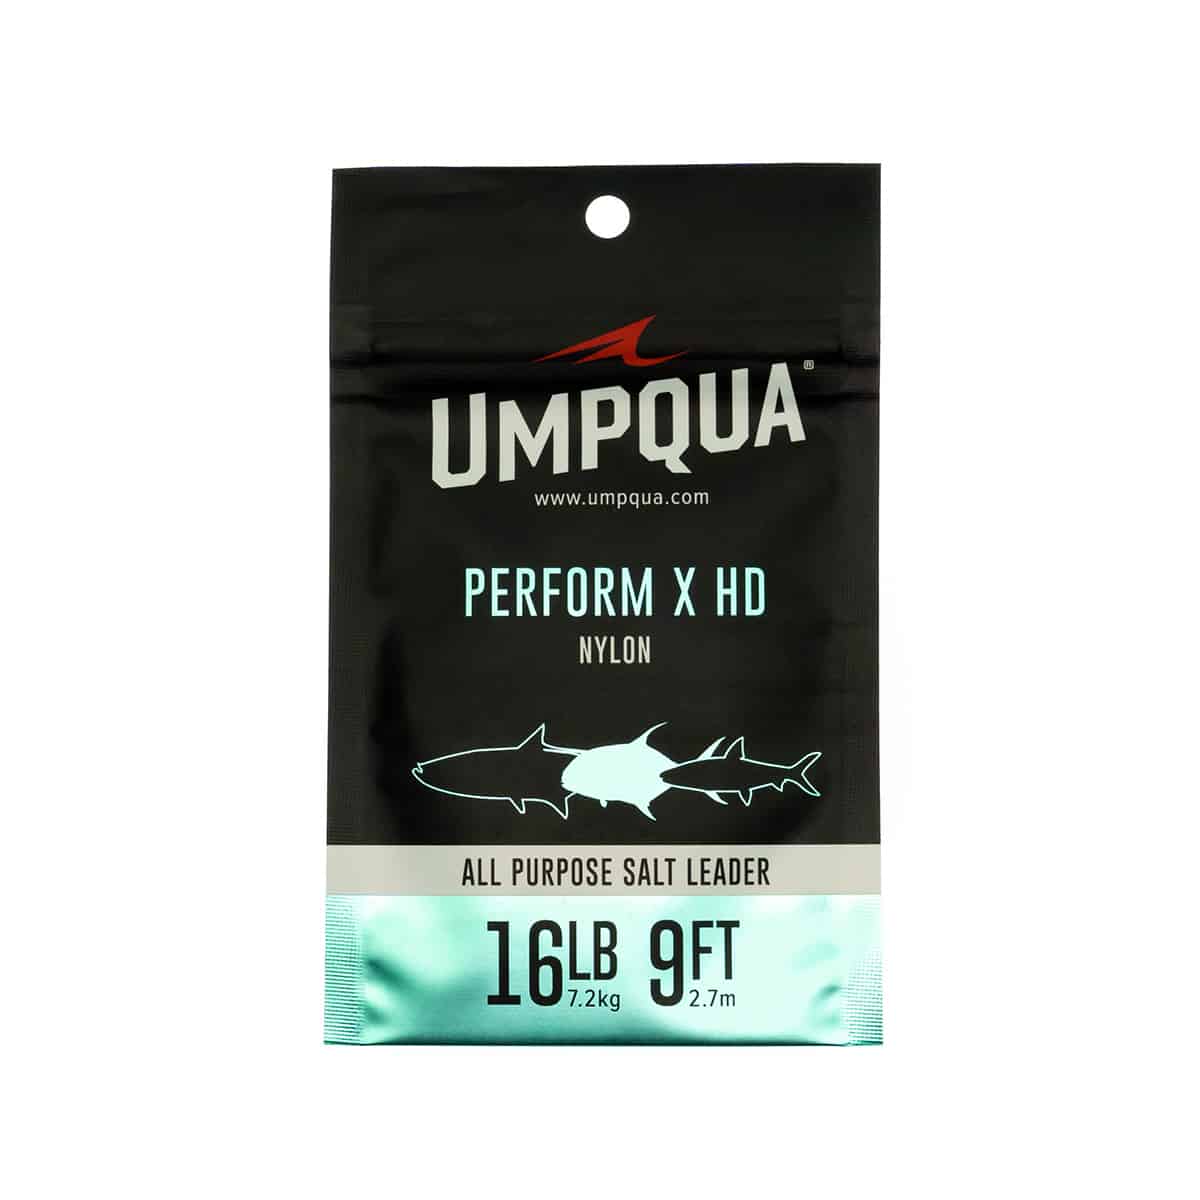 Umpqua PerformX HD All Purpose Saltwater Fishing Leader